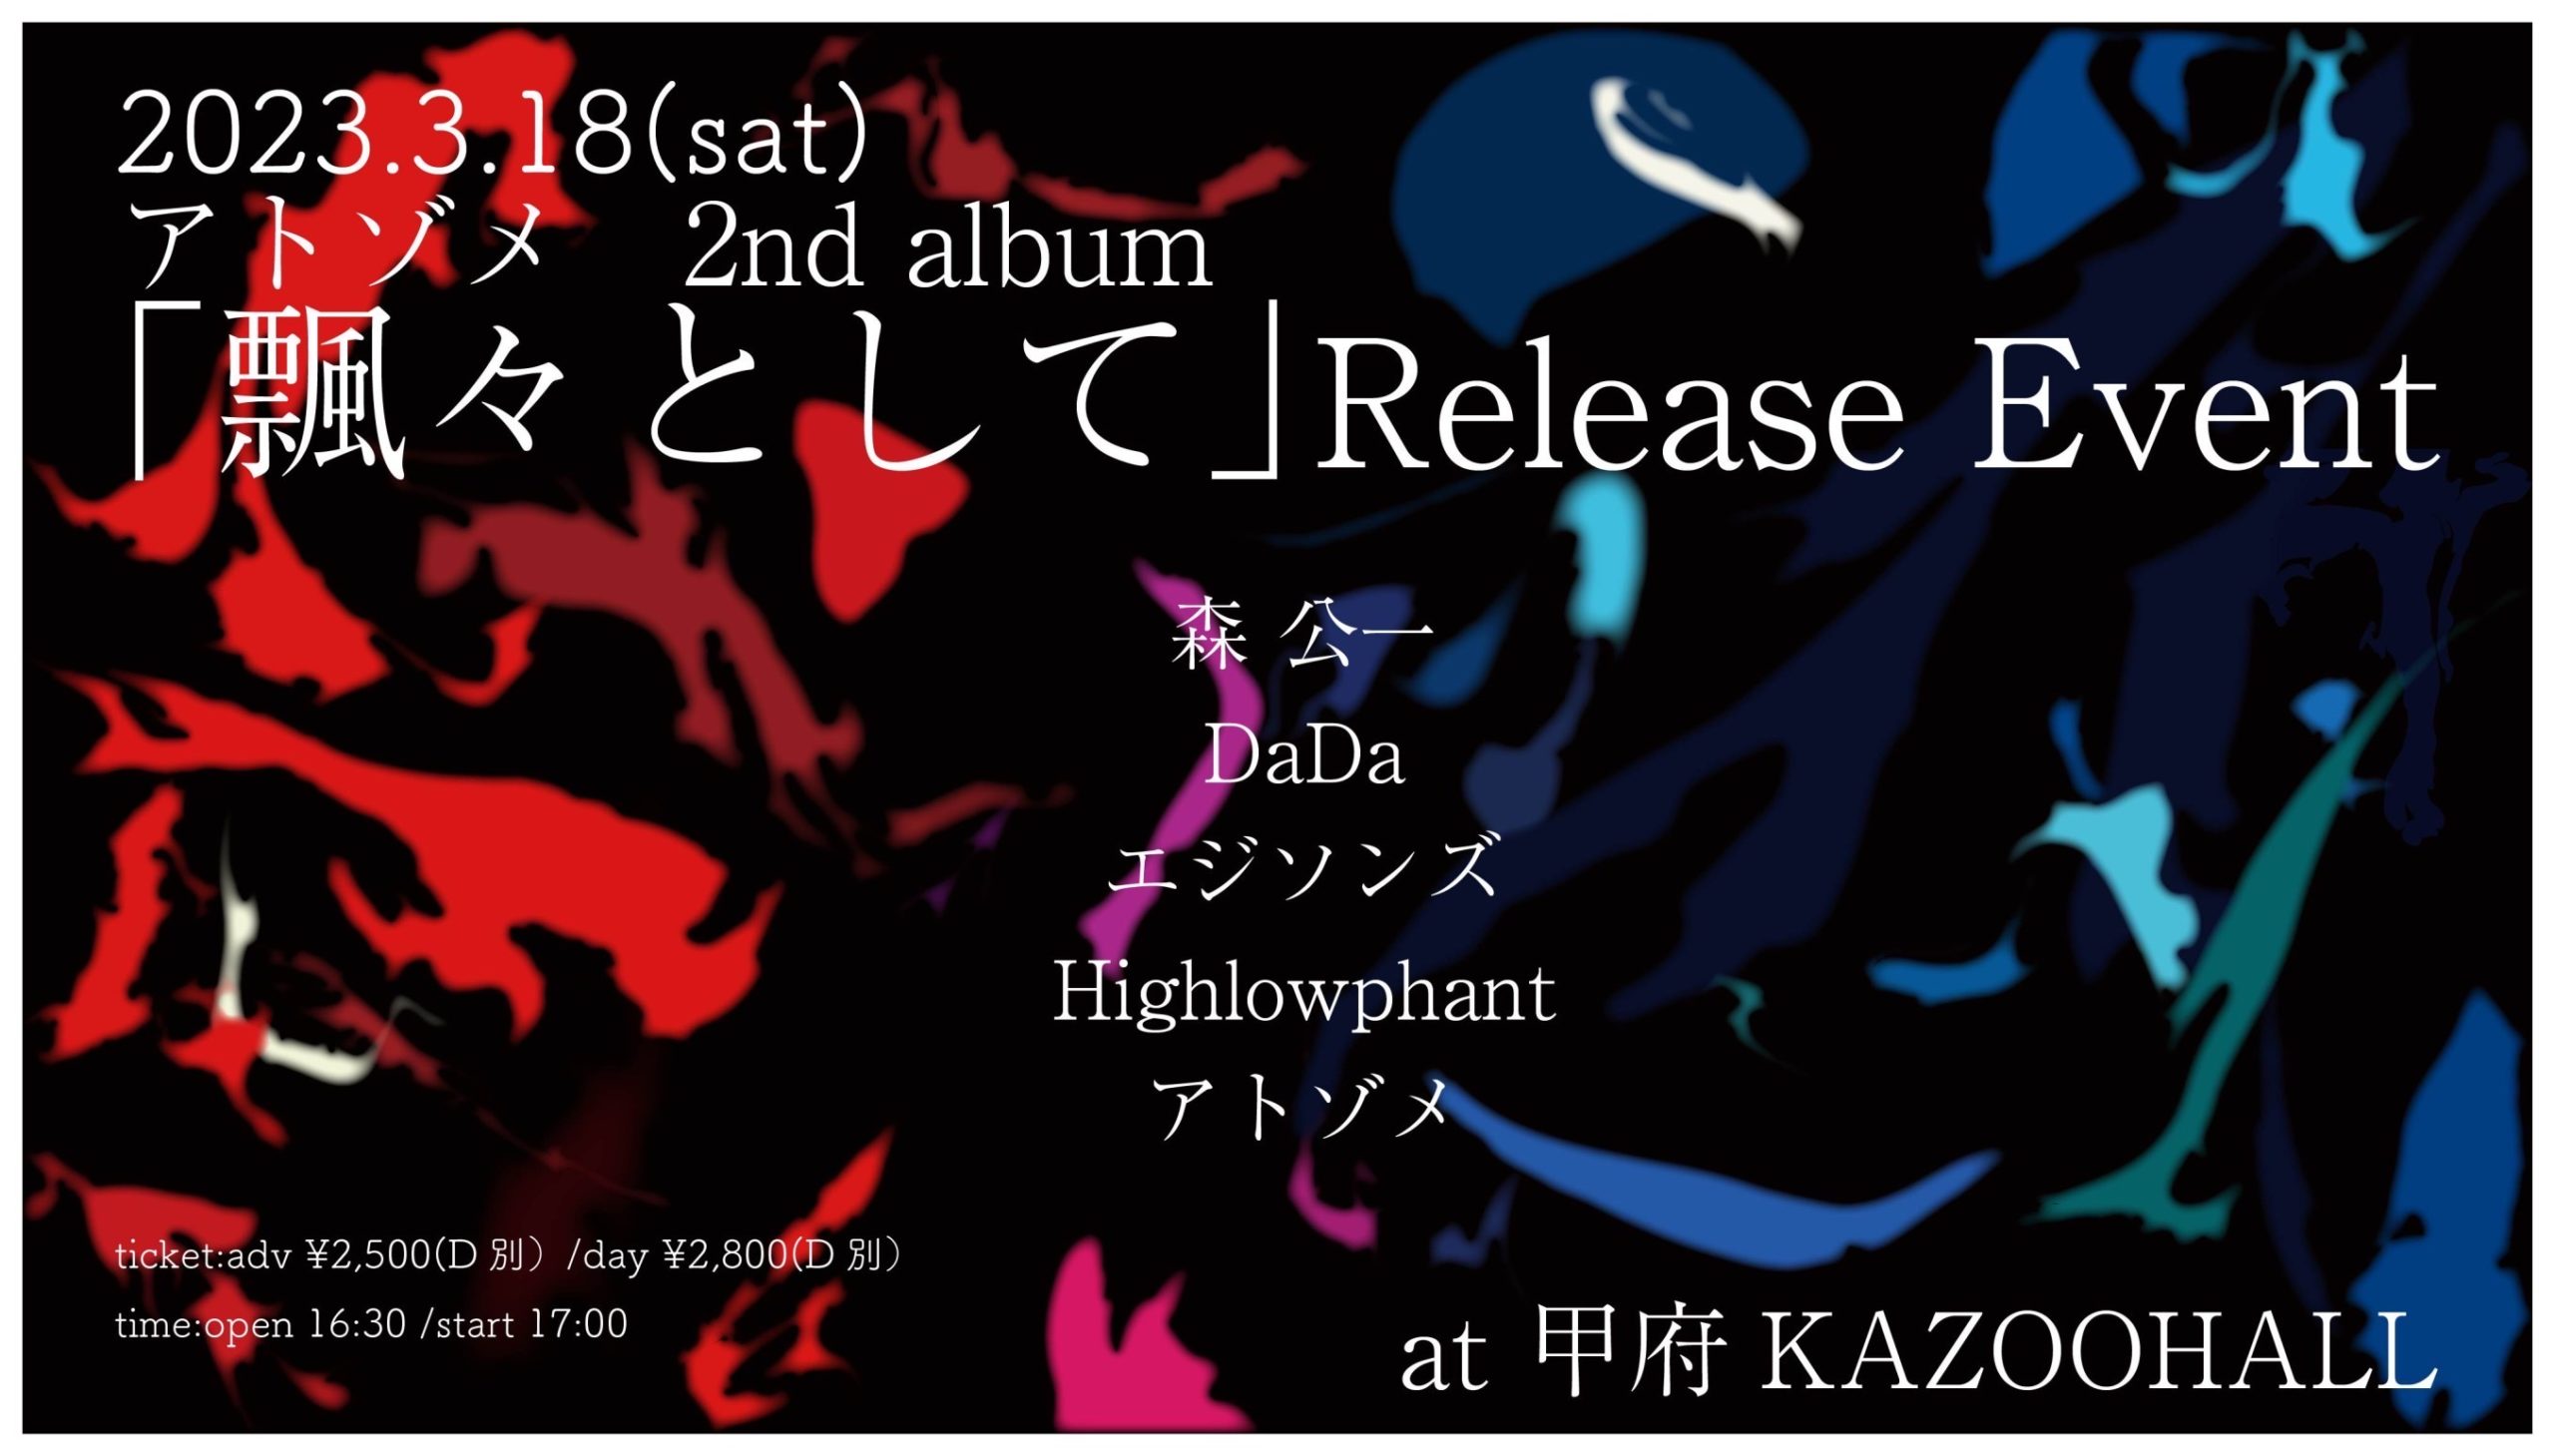 2nd album「飄々として」Release Event